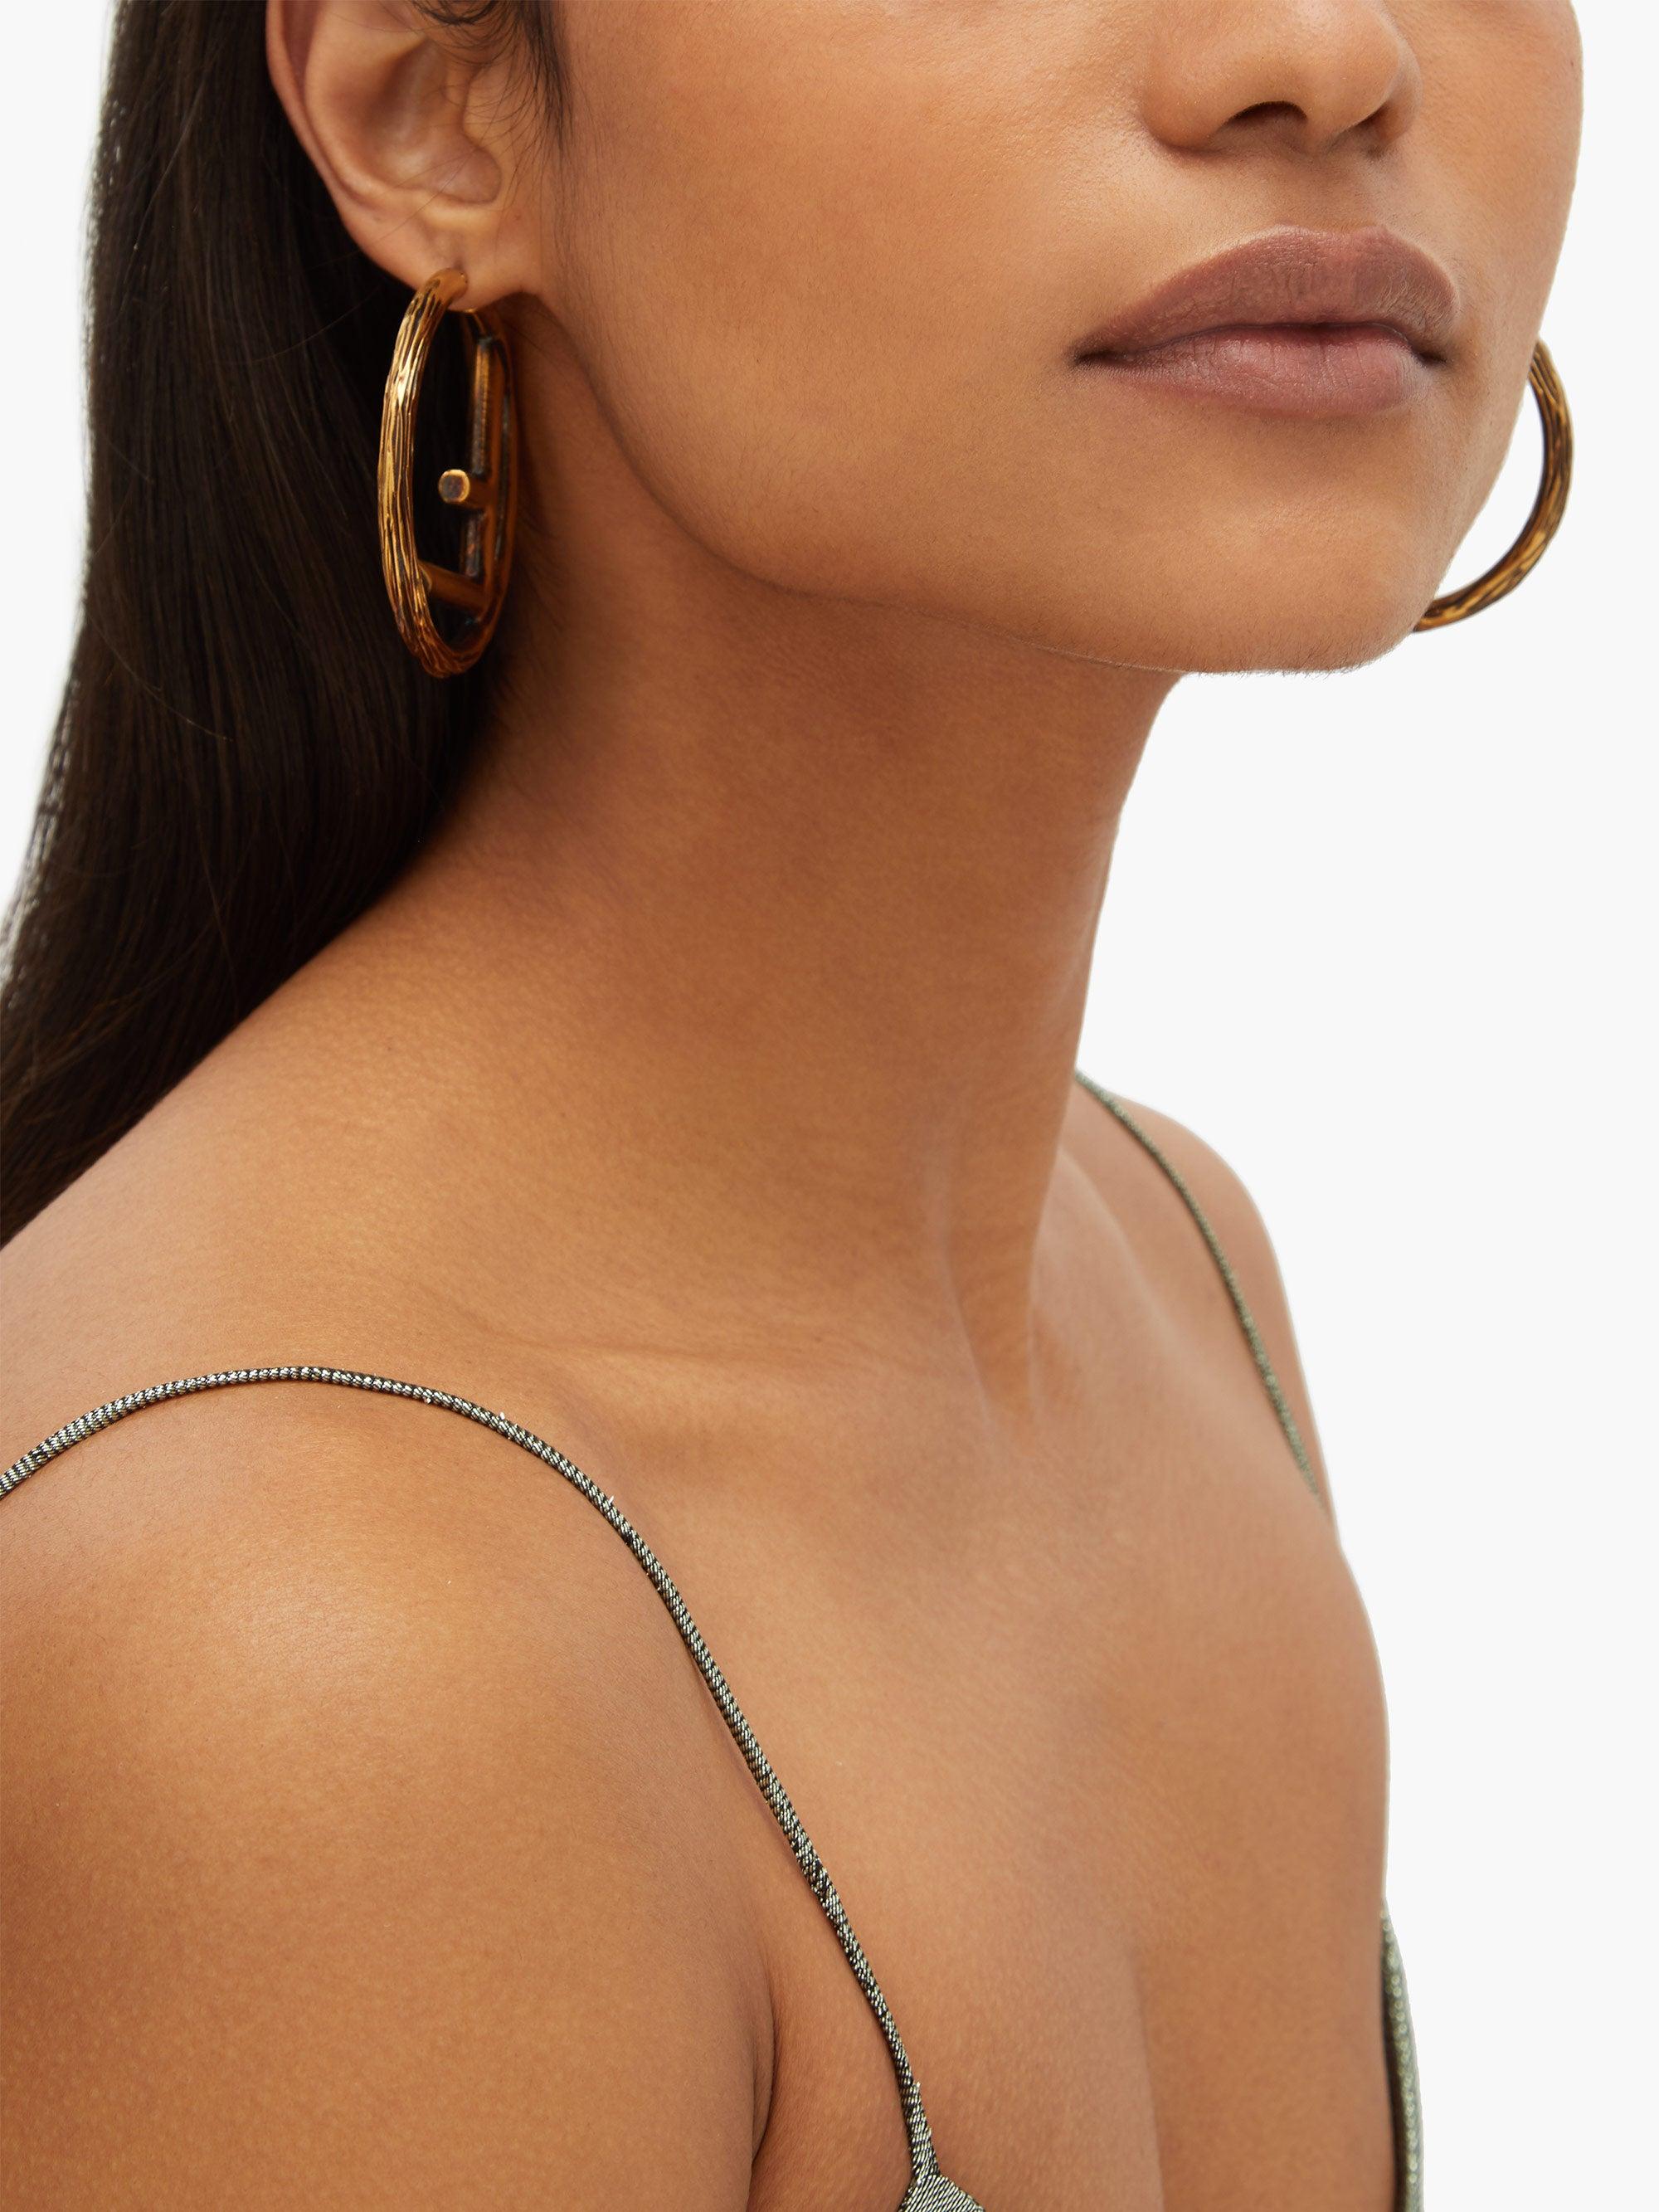 Fendi F-logo Large Hoop Earrings - Gold  Large hoop earrings, Hoop earrings,  Earrings